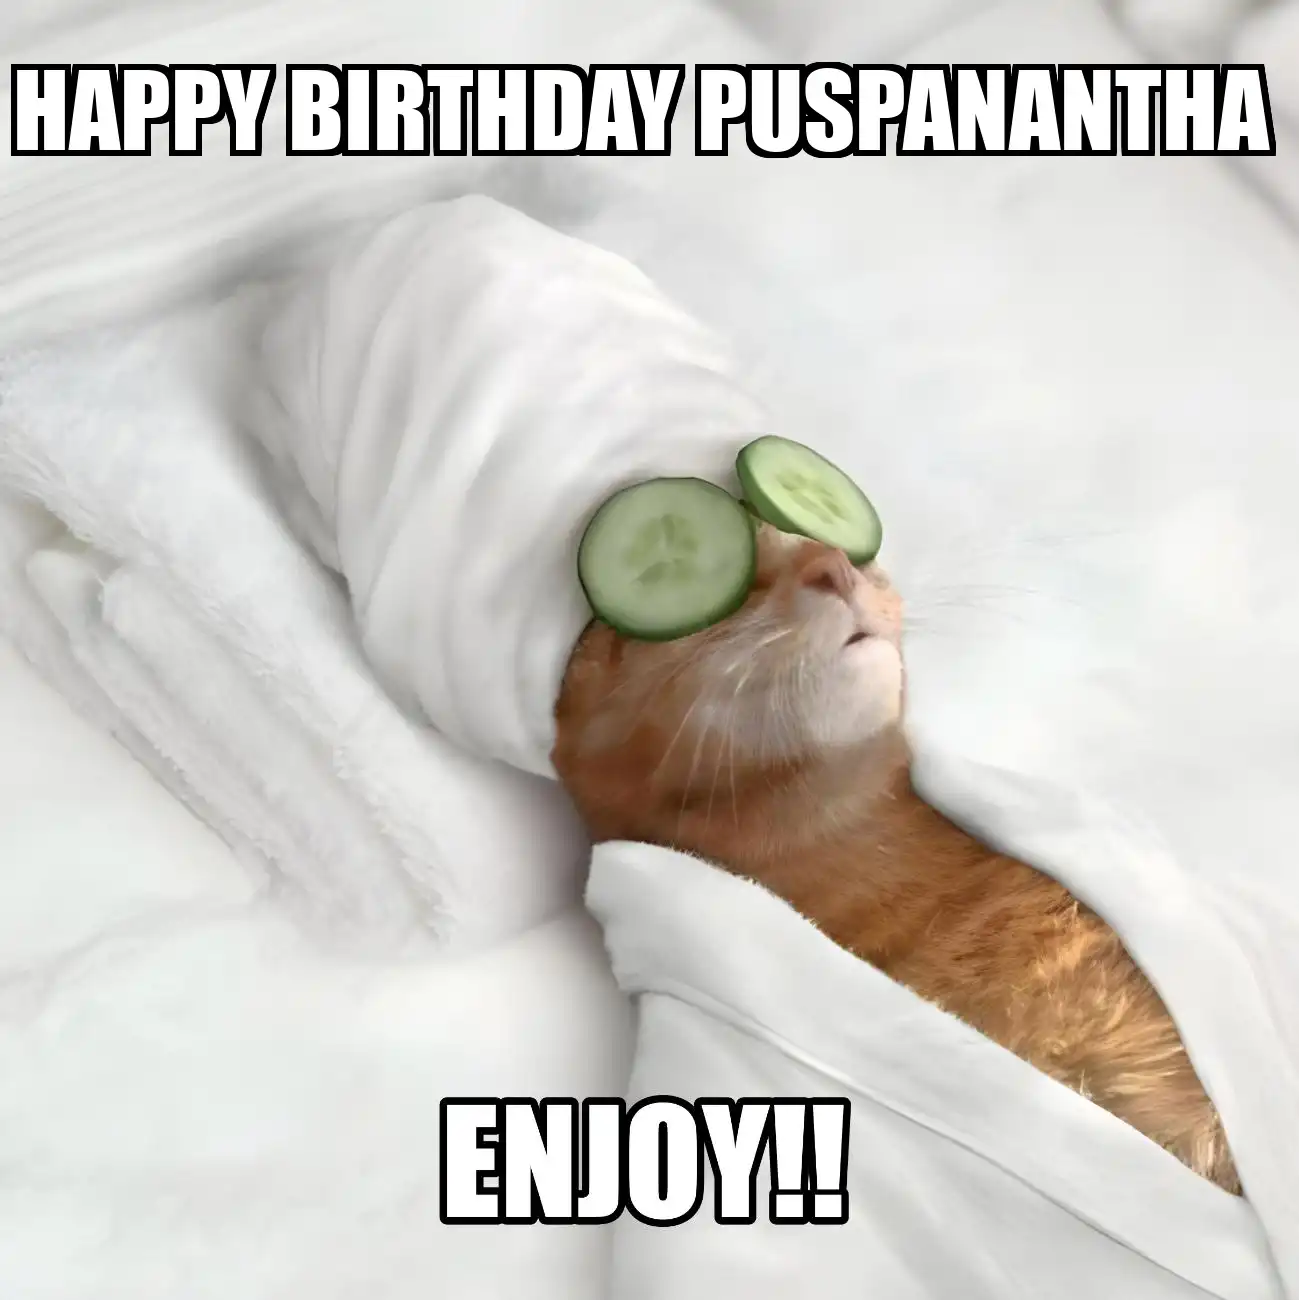 Happy Birthday Puspanantha Enjoy Cat Meme